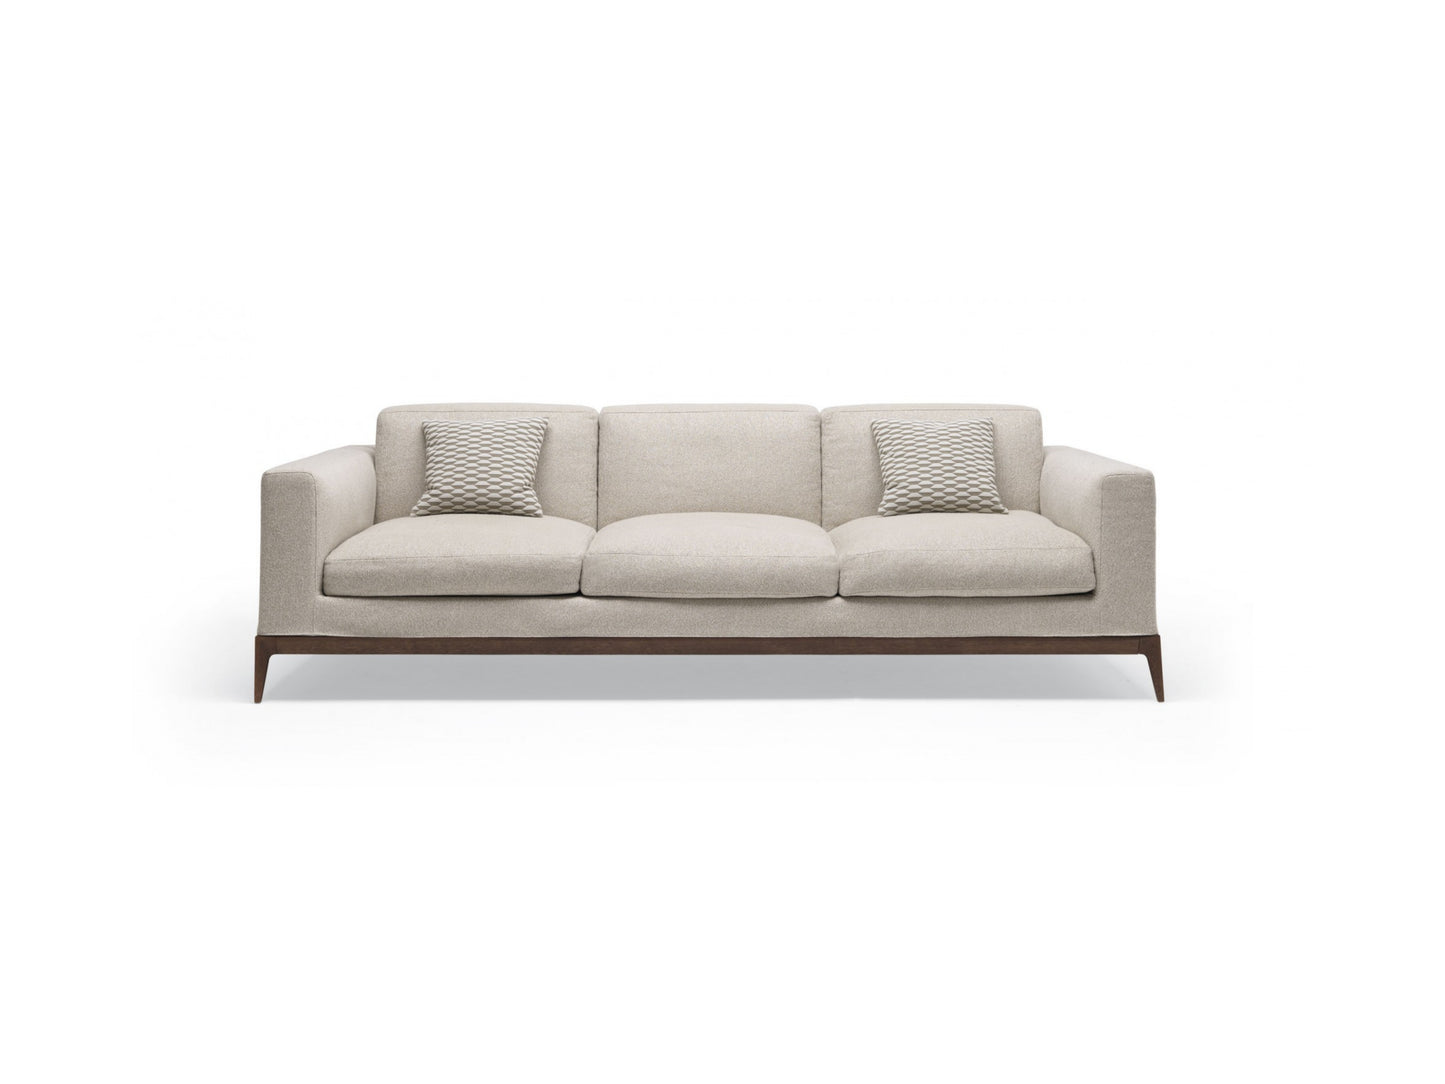 ANTIBES | 3 Seater sofa by MisuraEmme